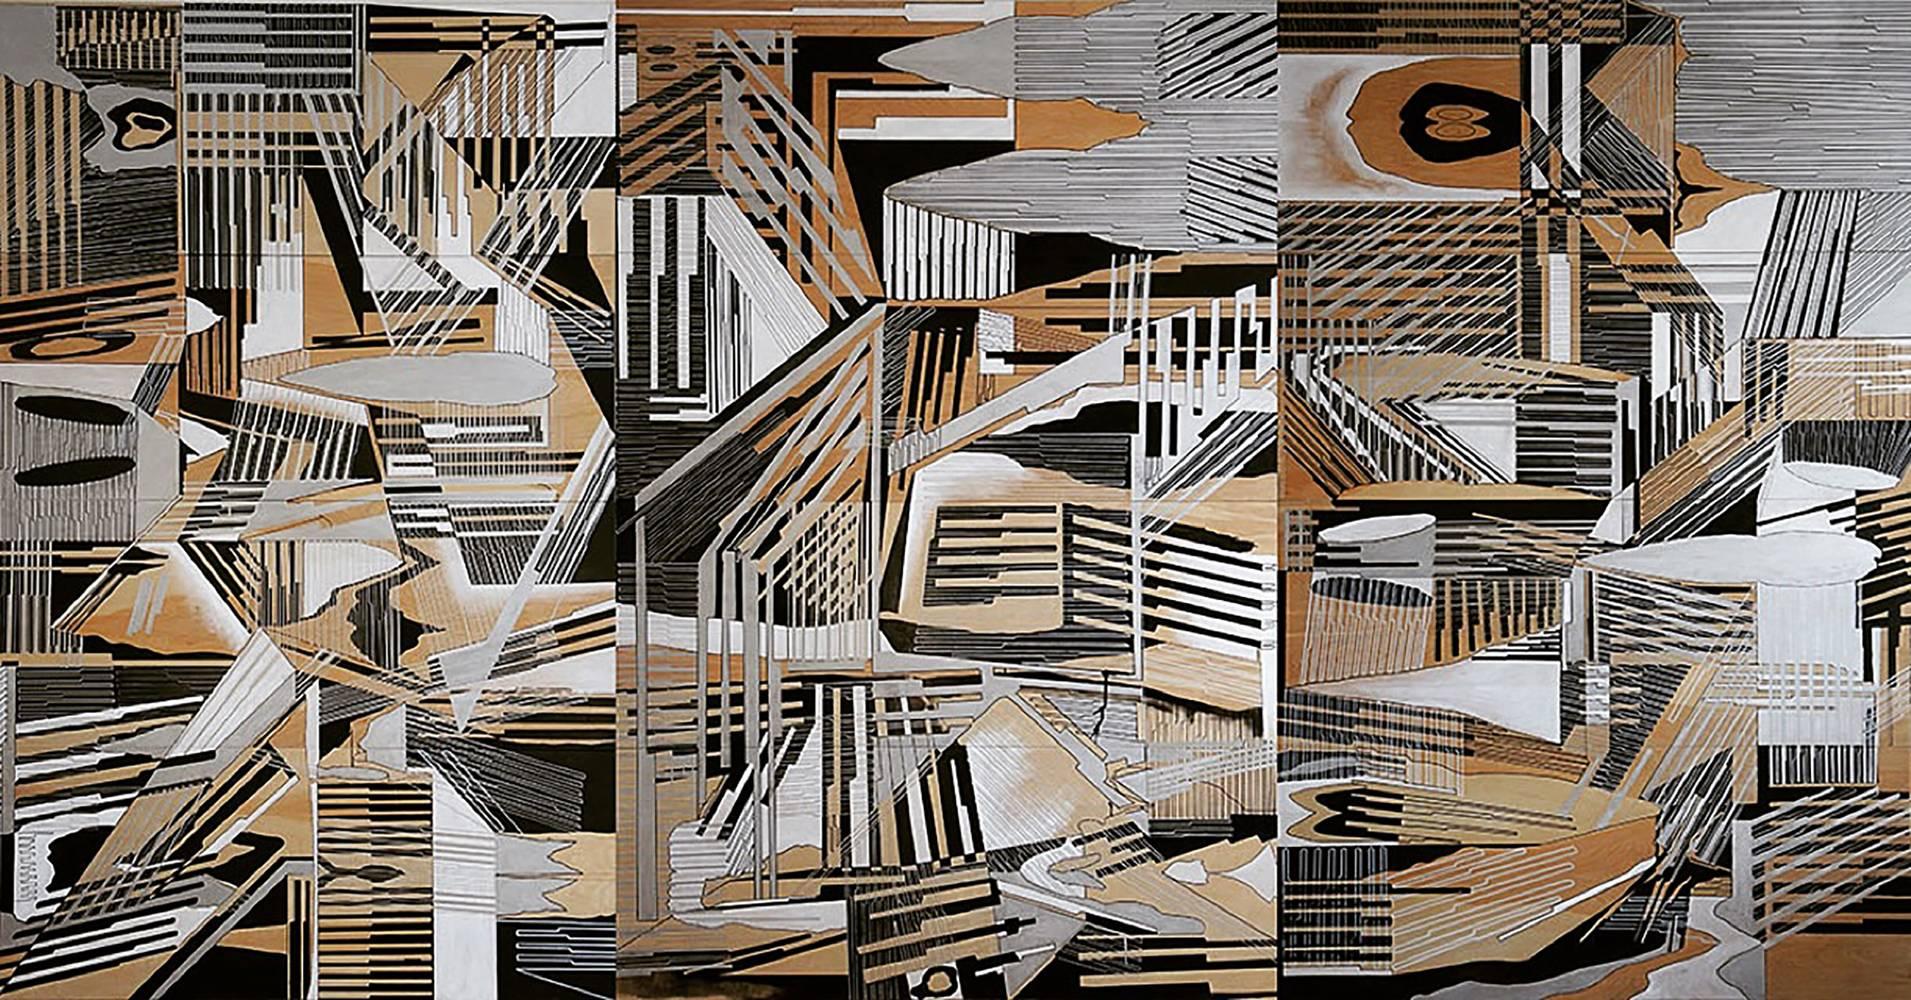 Vargas-Suarez Universal Abstract Painting – Vectorscape I